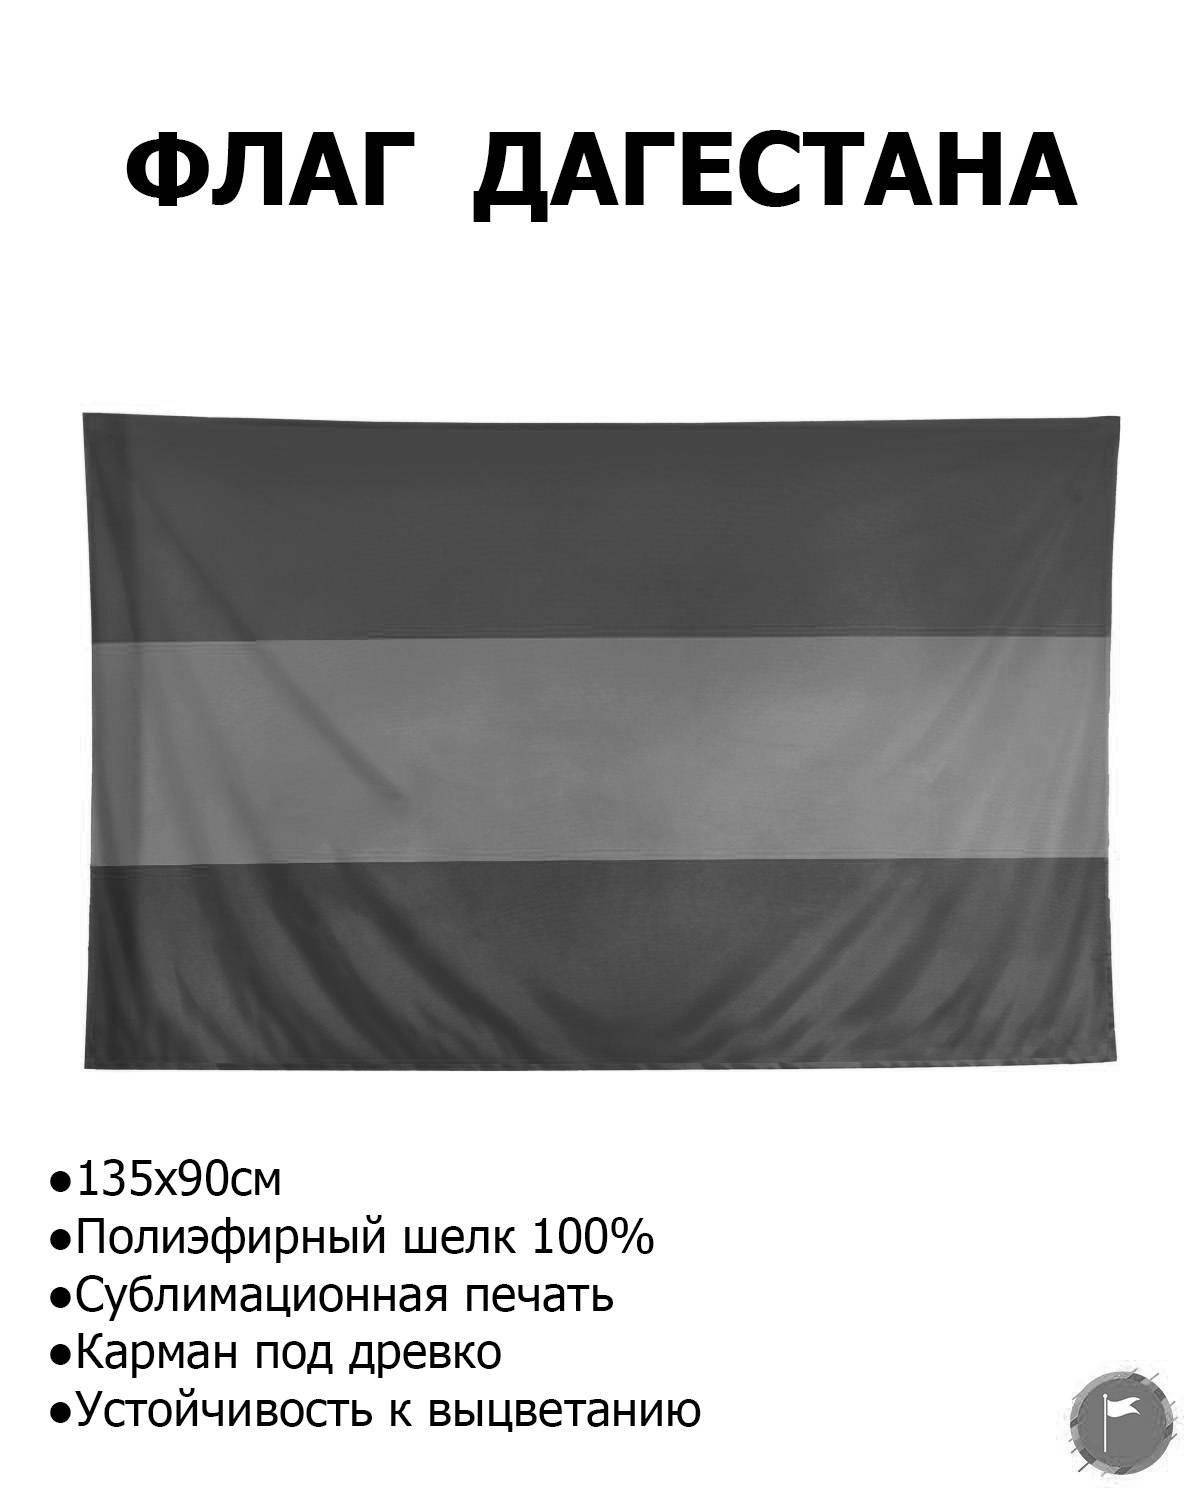 Раскраска драматический флаг дагестана